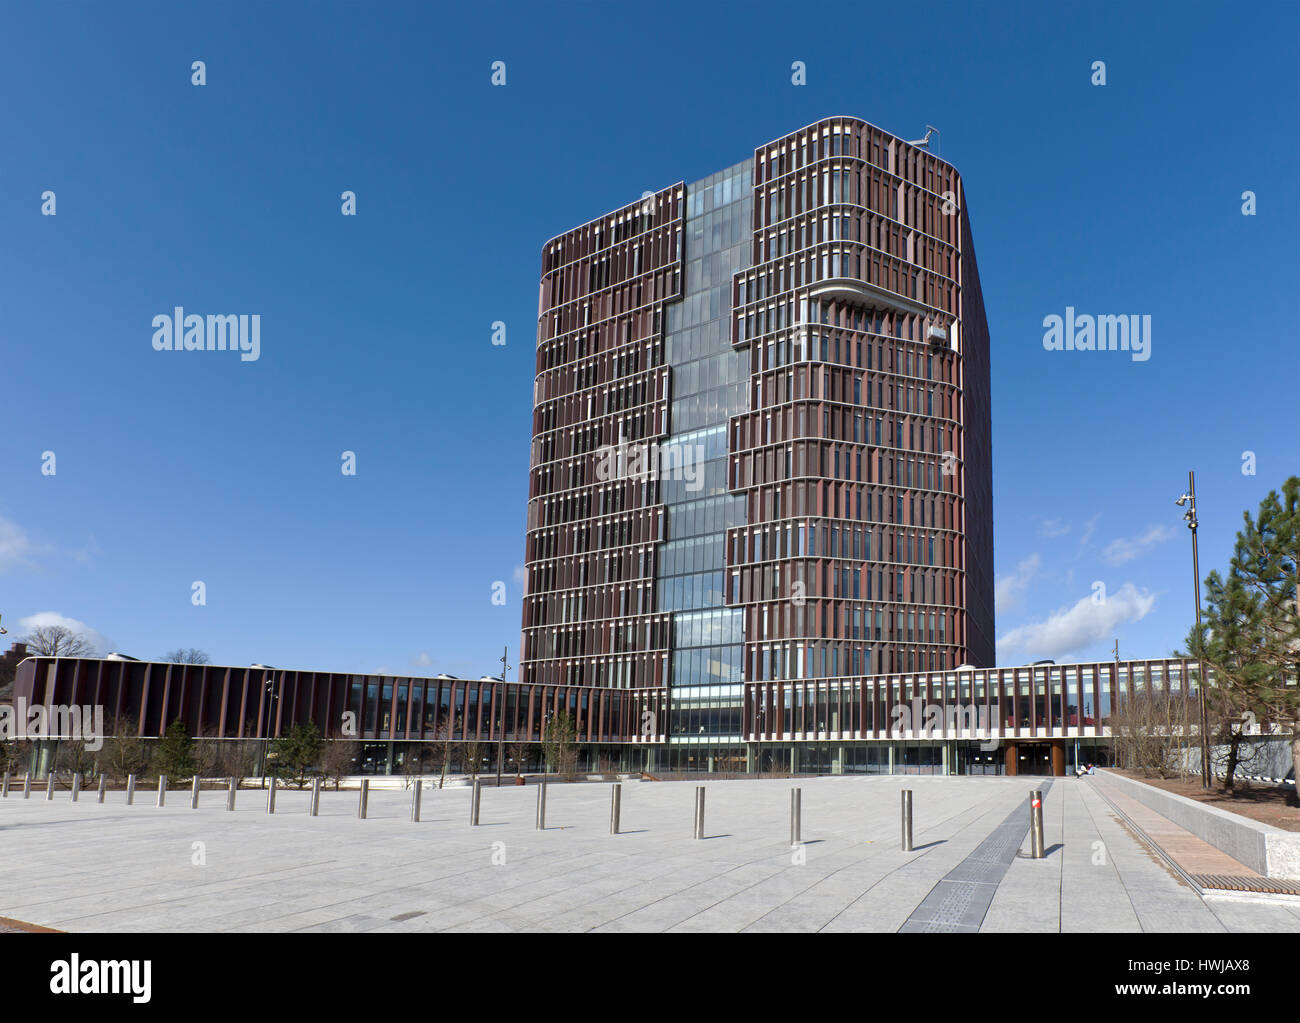 La Torre Di Maersk, Mærsk Tårnet. Facoltà di Scienze sanitarie e mediche, Università di Copenaghen, Danimarca. Parte del complesso di Panum. Foto Stock